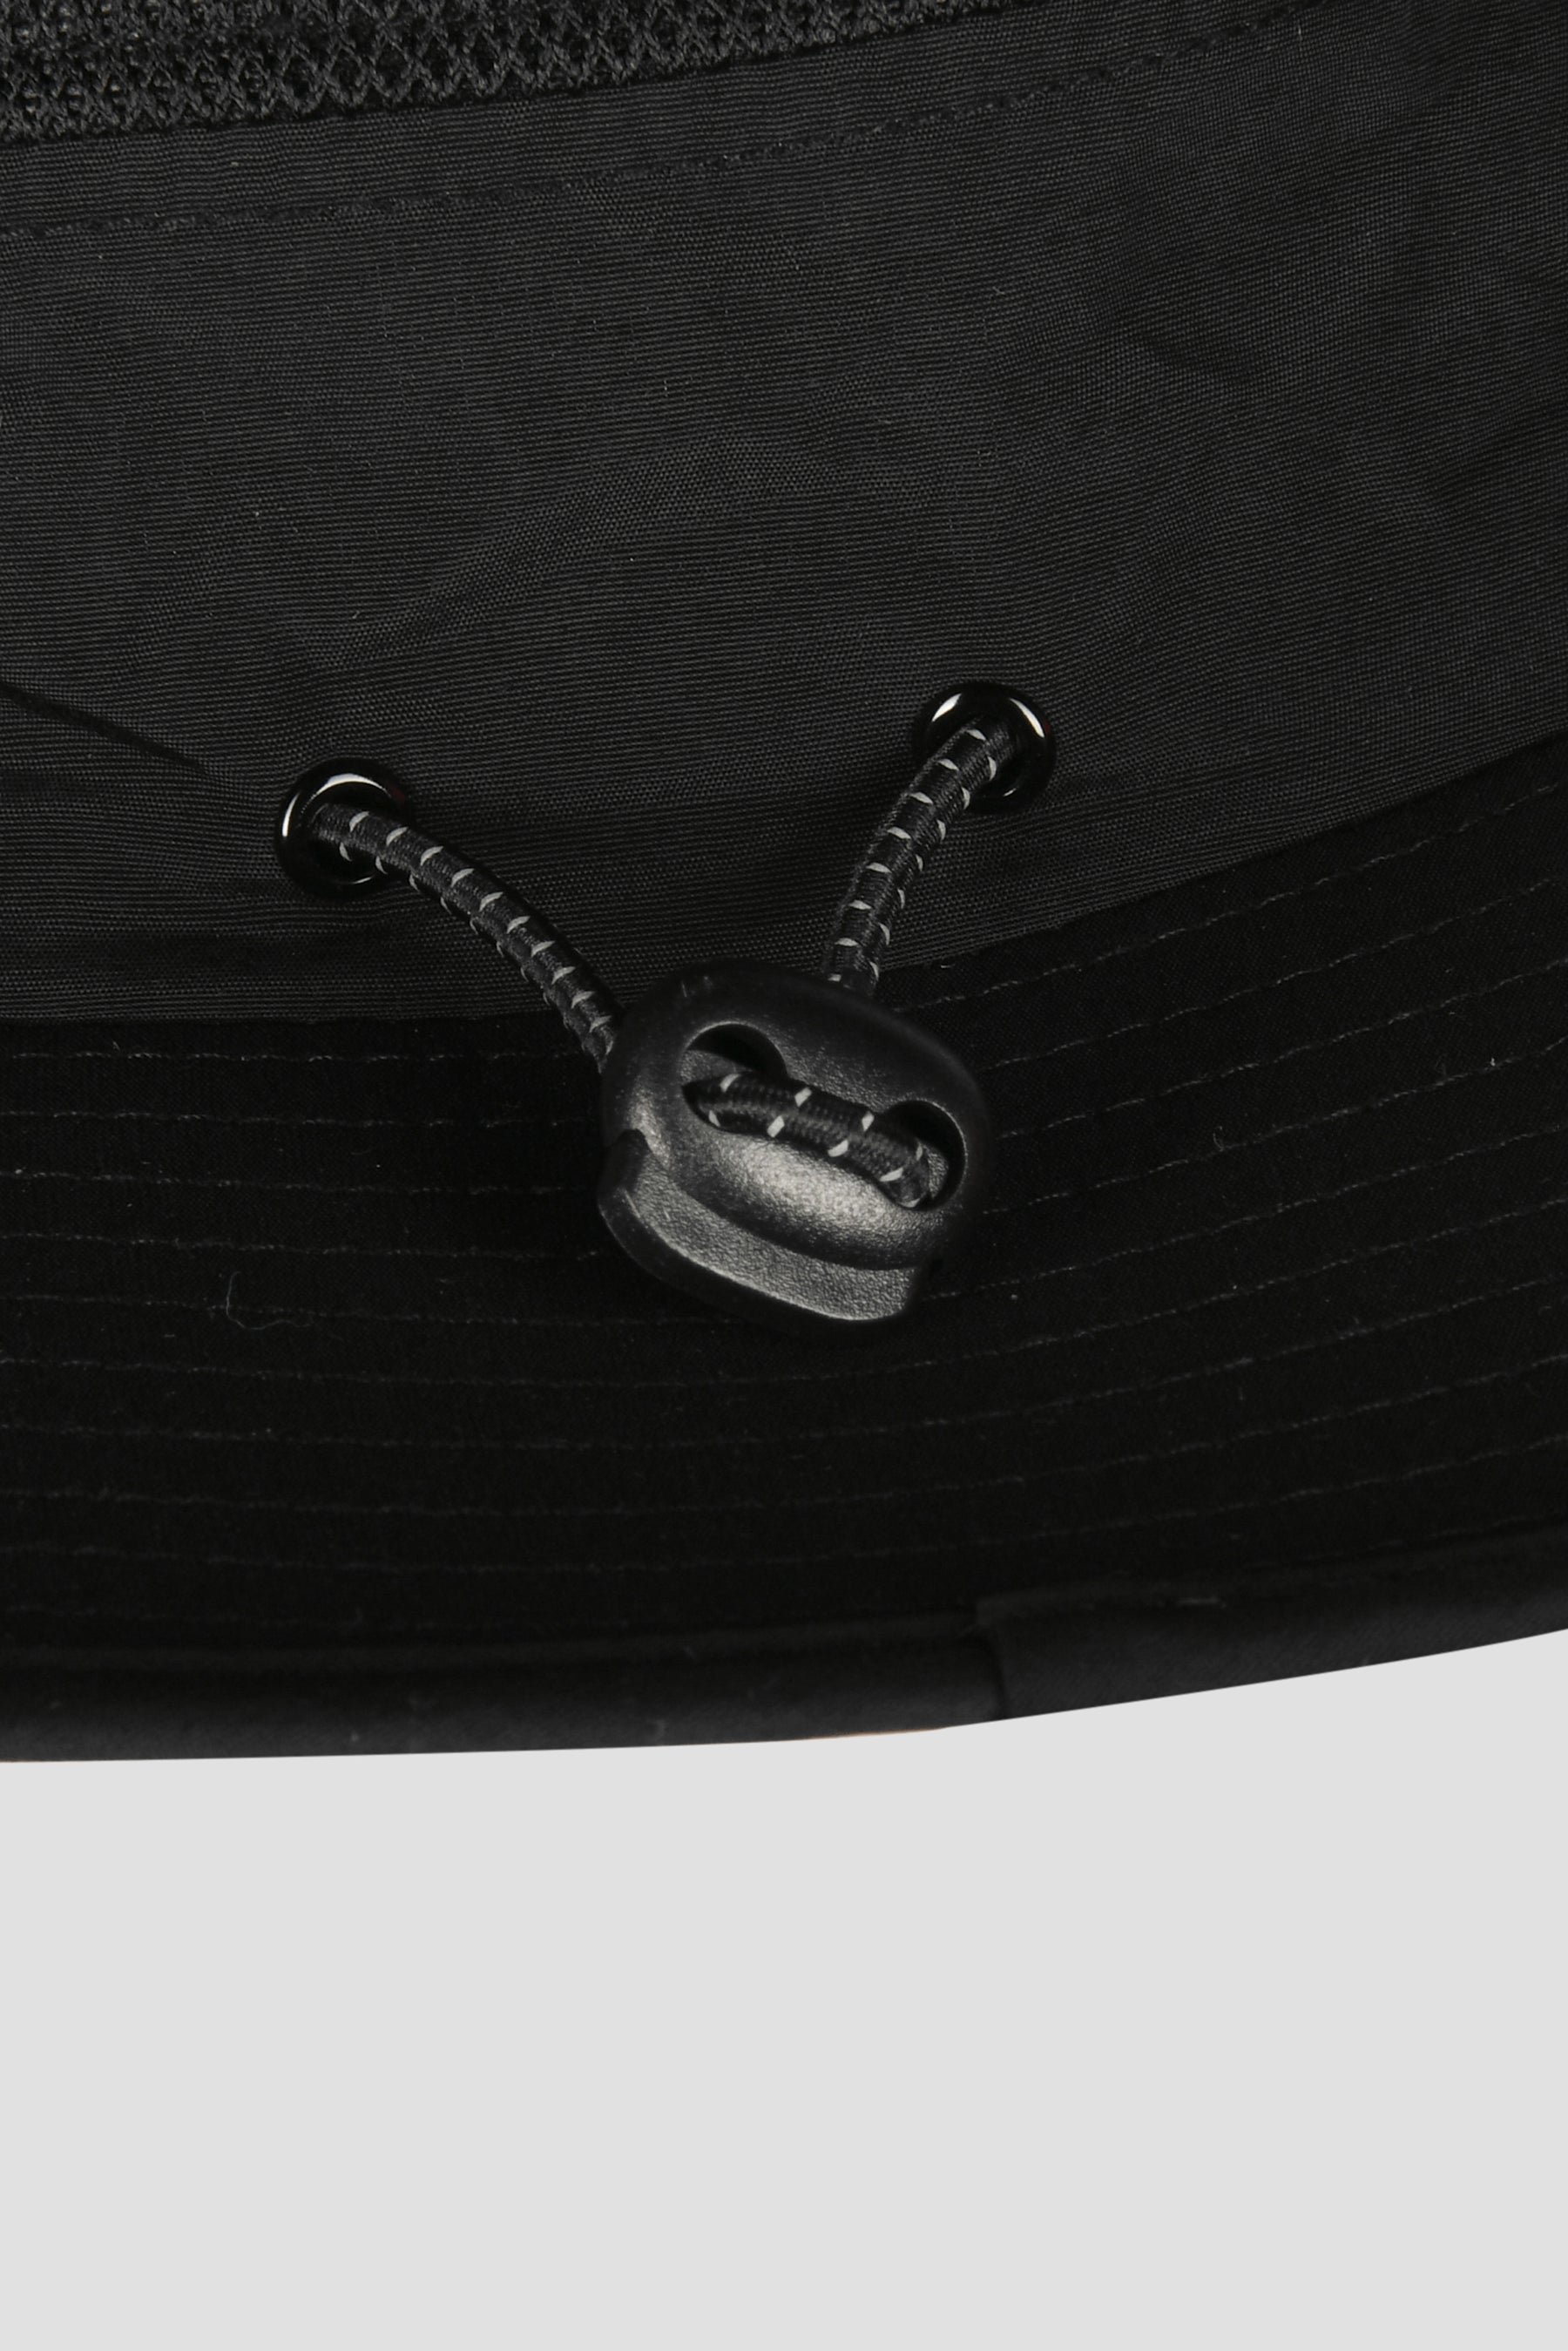 Trek Boonie Hat - Black